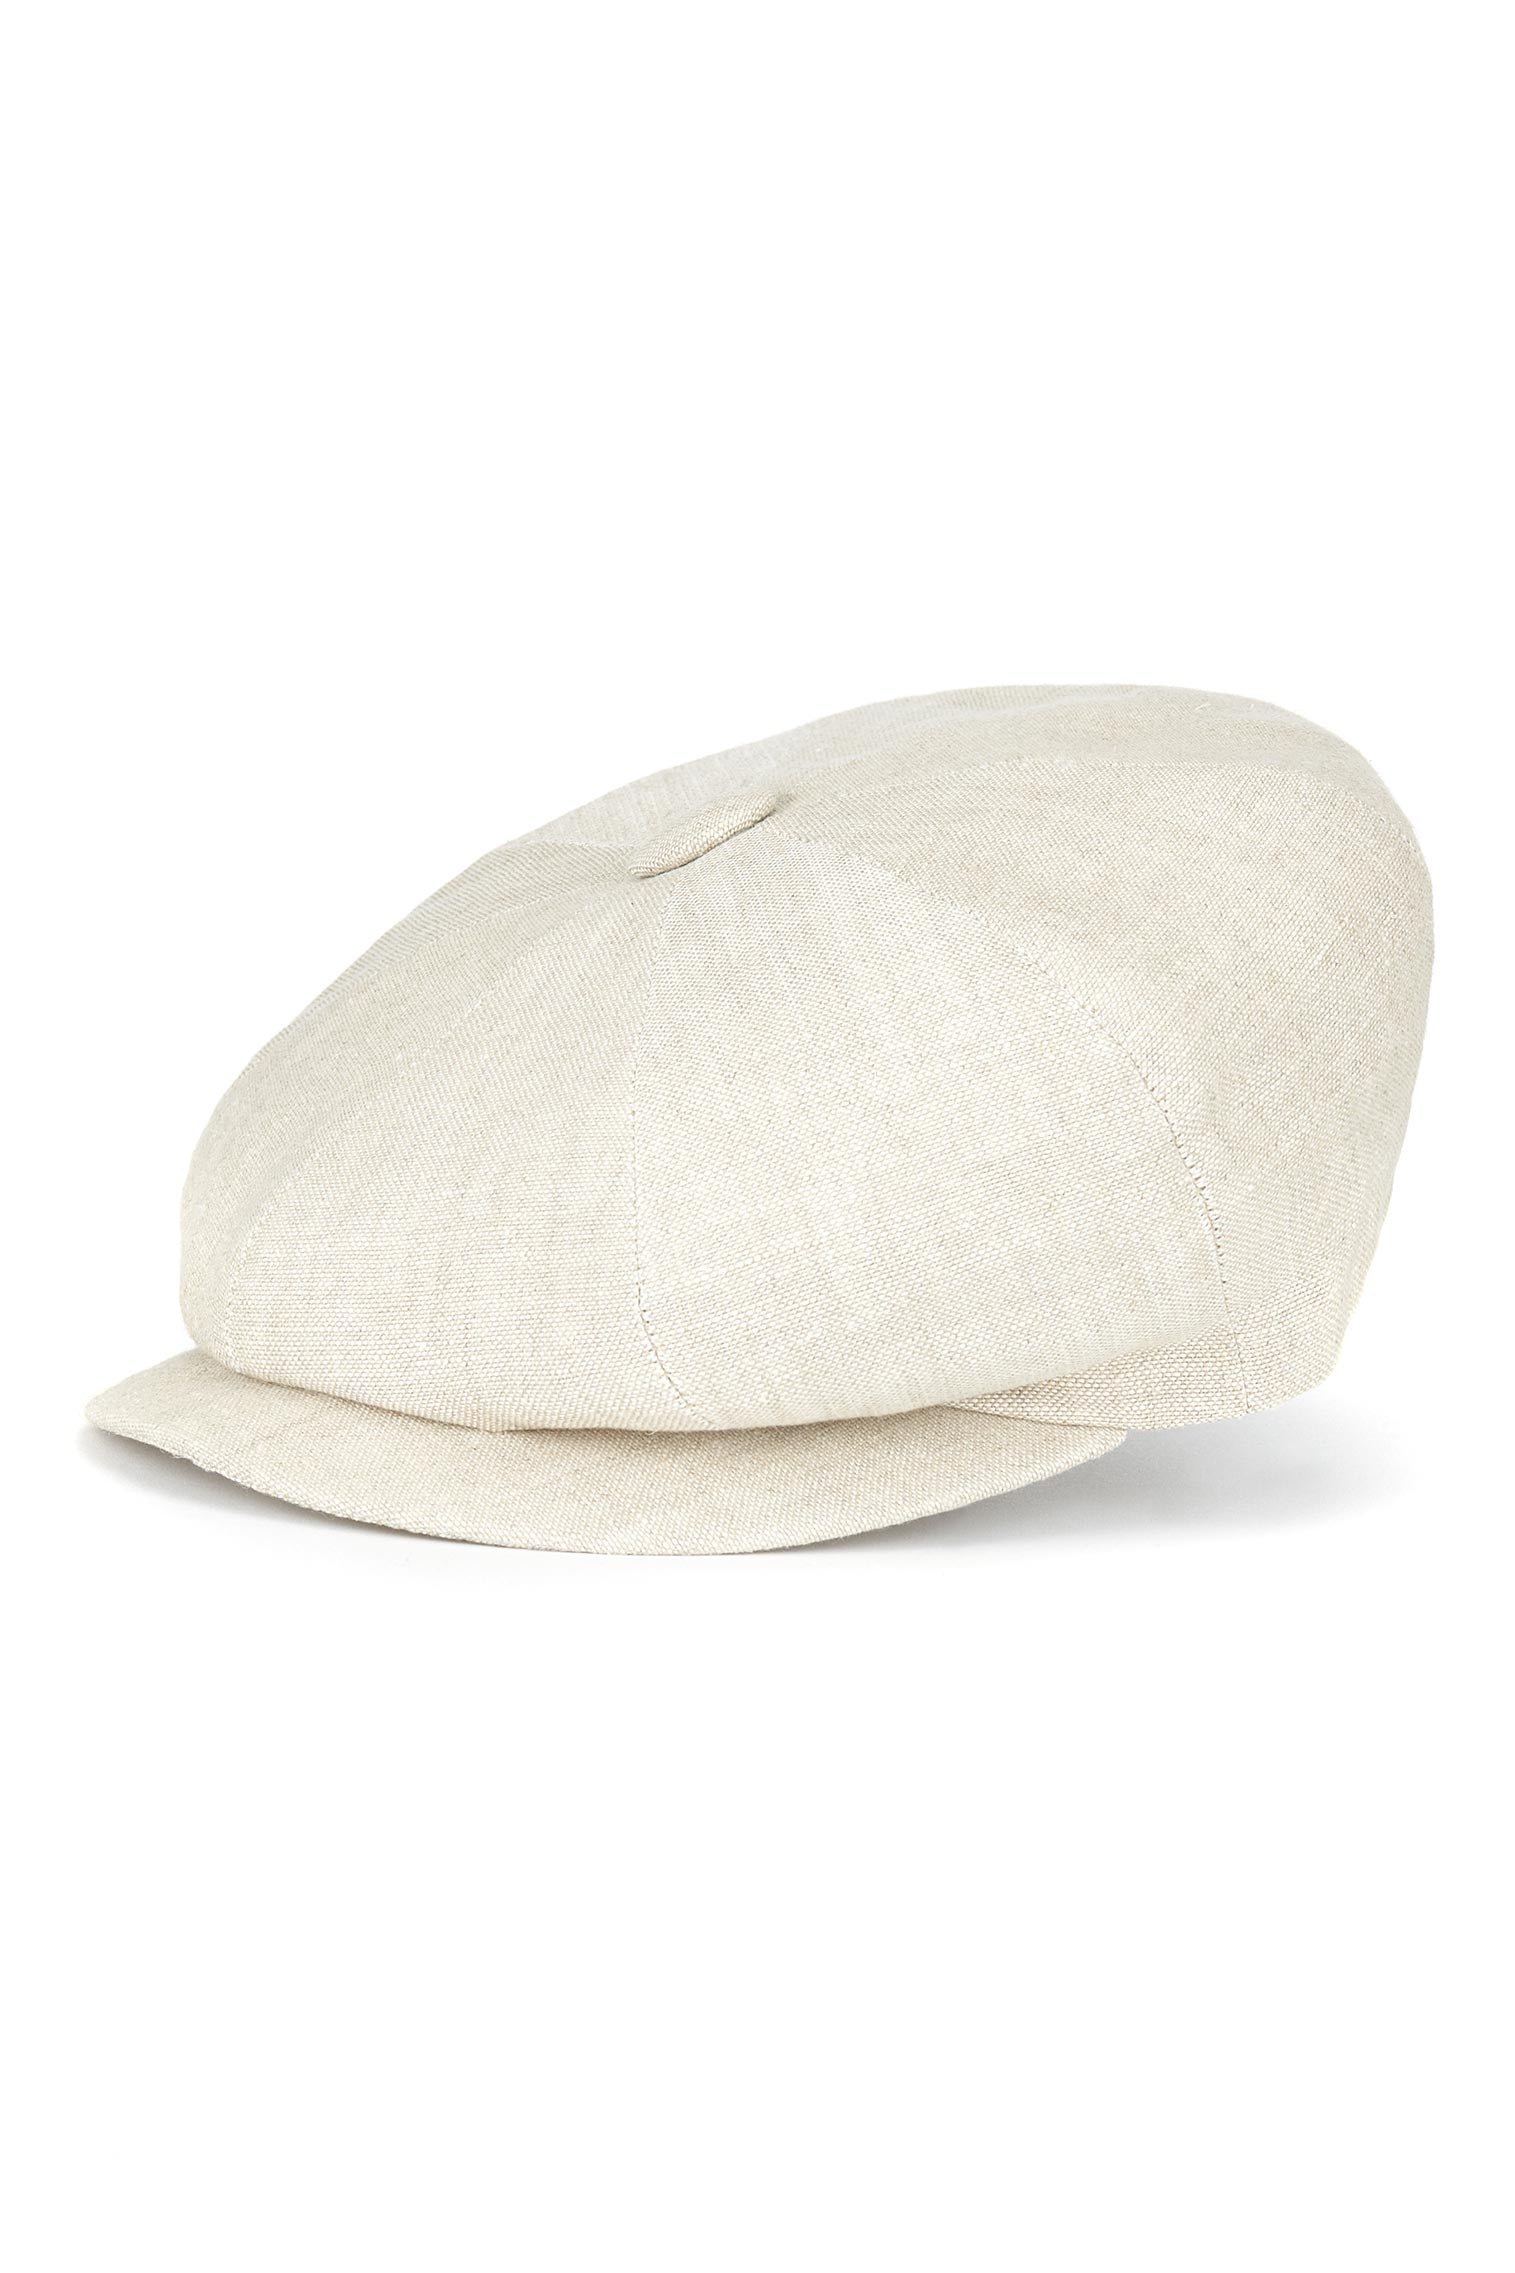 Linen Muirfield Bakerboy Cap - Hats for Tall People - Lock & Co. Hatters London UK